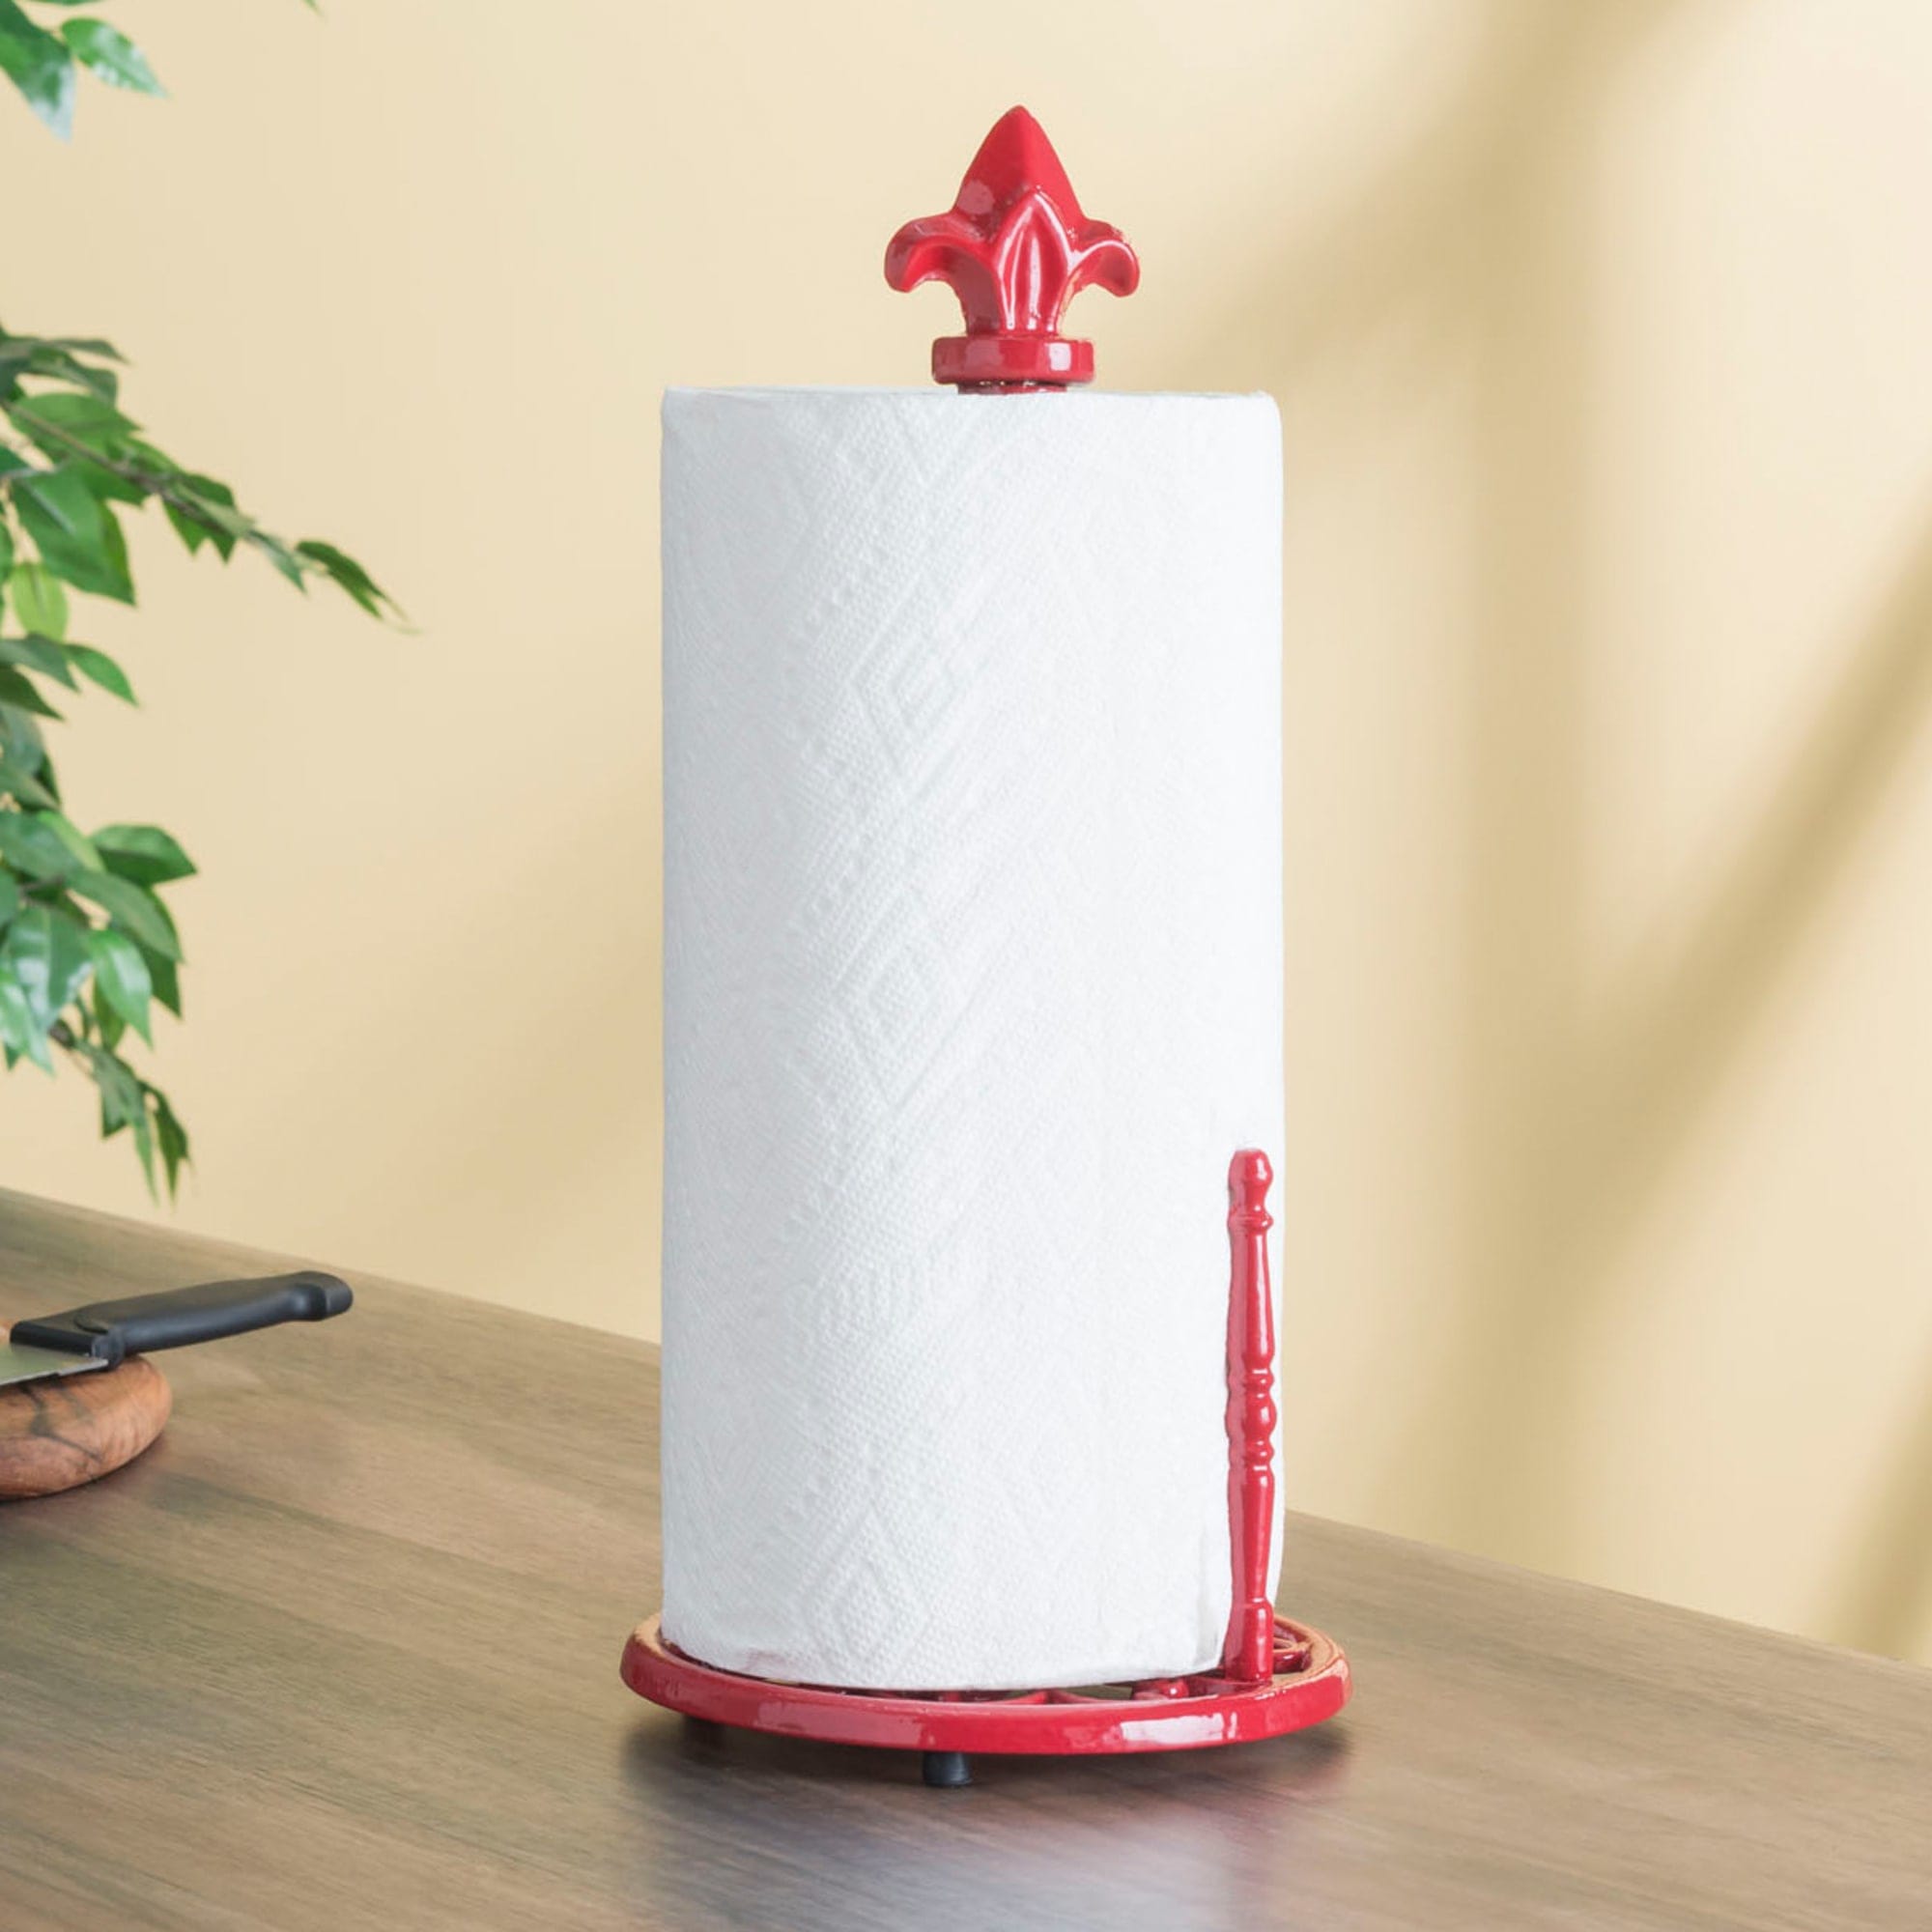 Home Basics Cast Iron Fleur De Lis Paper Towel Holder, Red $10.00 EACH, CASE PACK OF 3